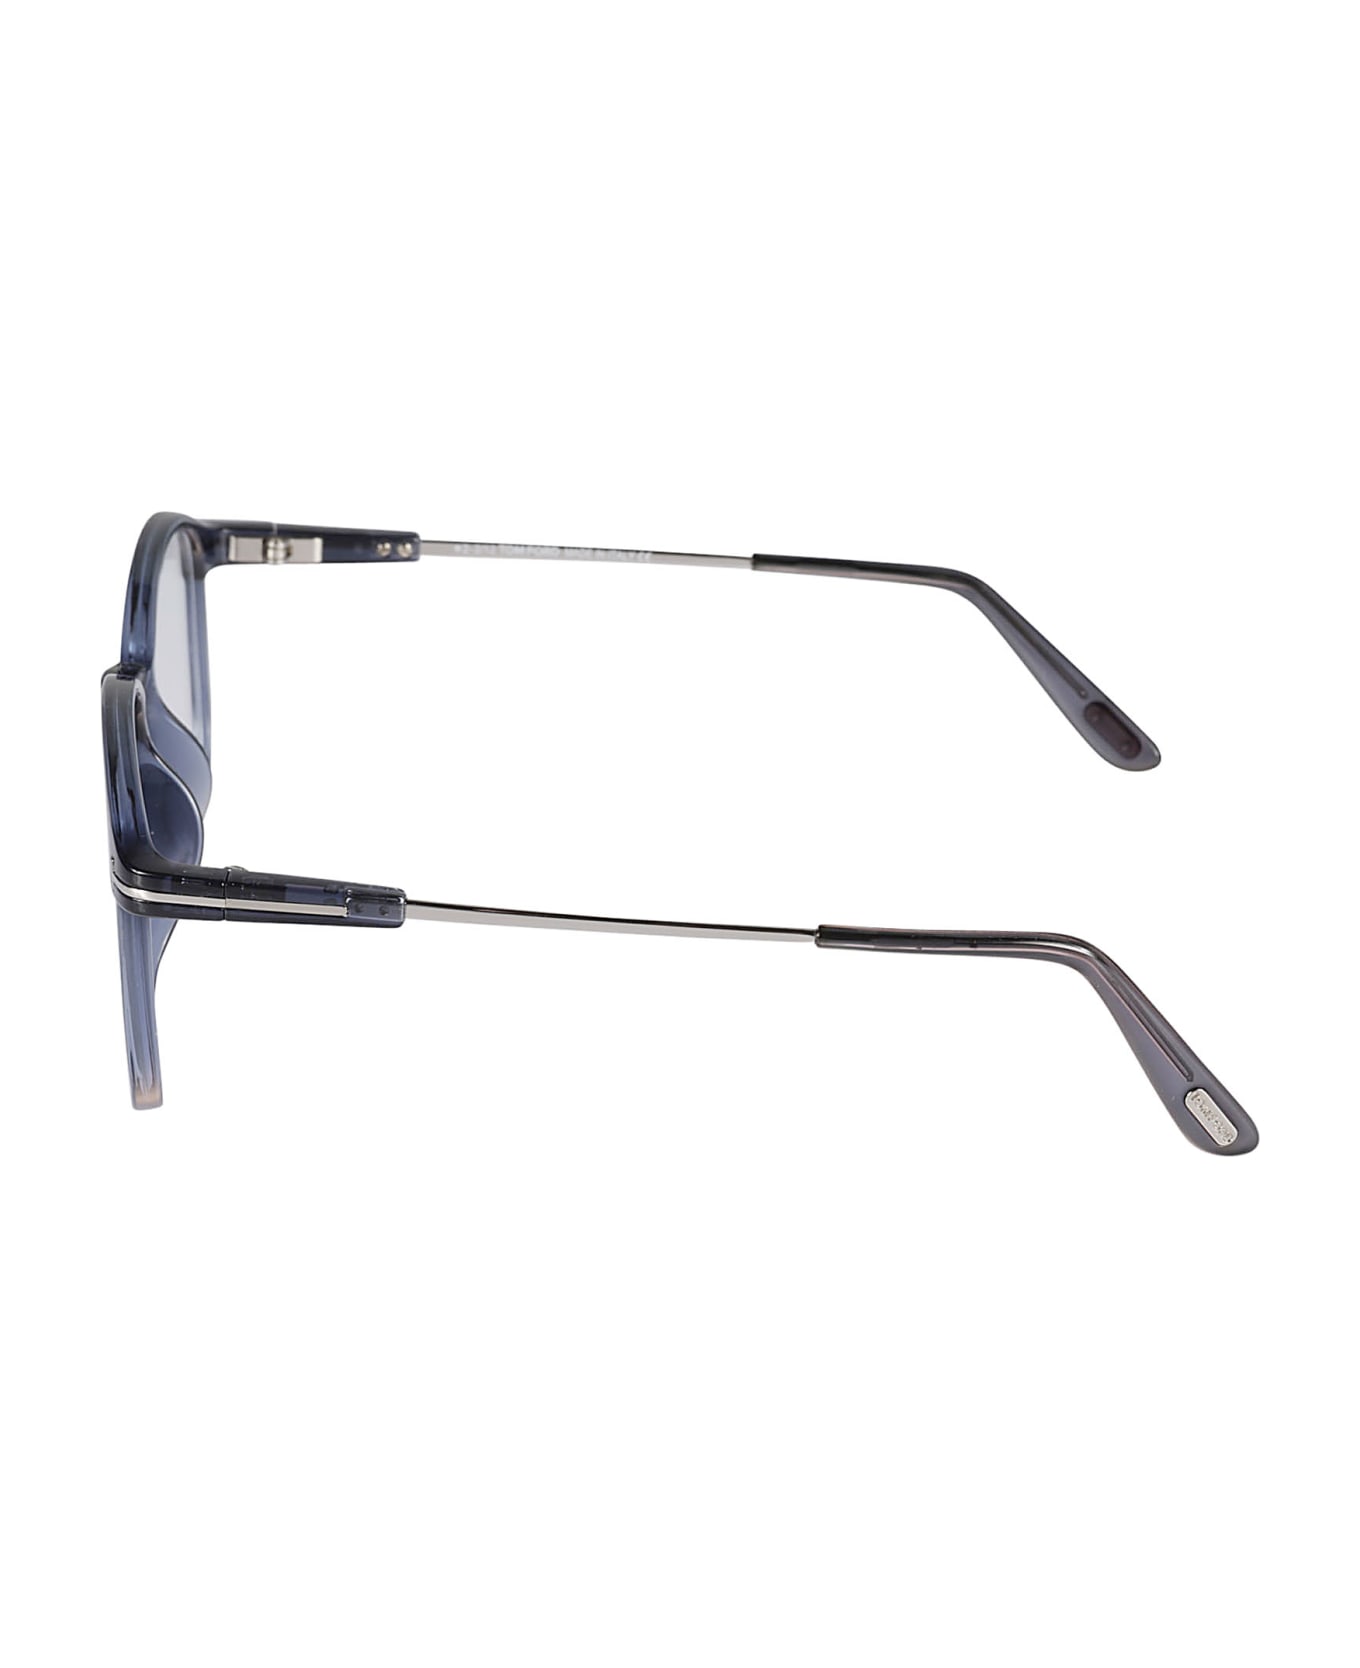 Tom Ford Eyewear Round Clear Lens Glasses - N/A